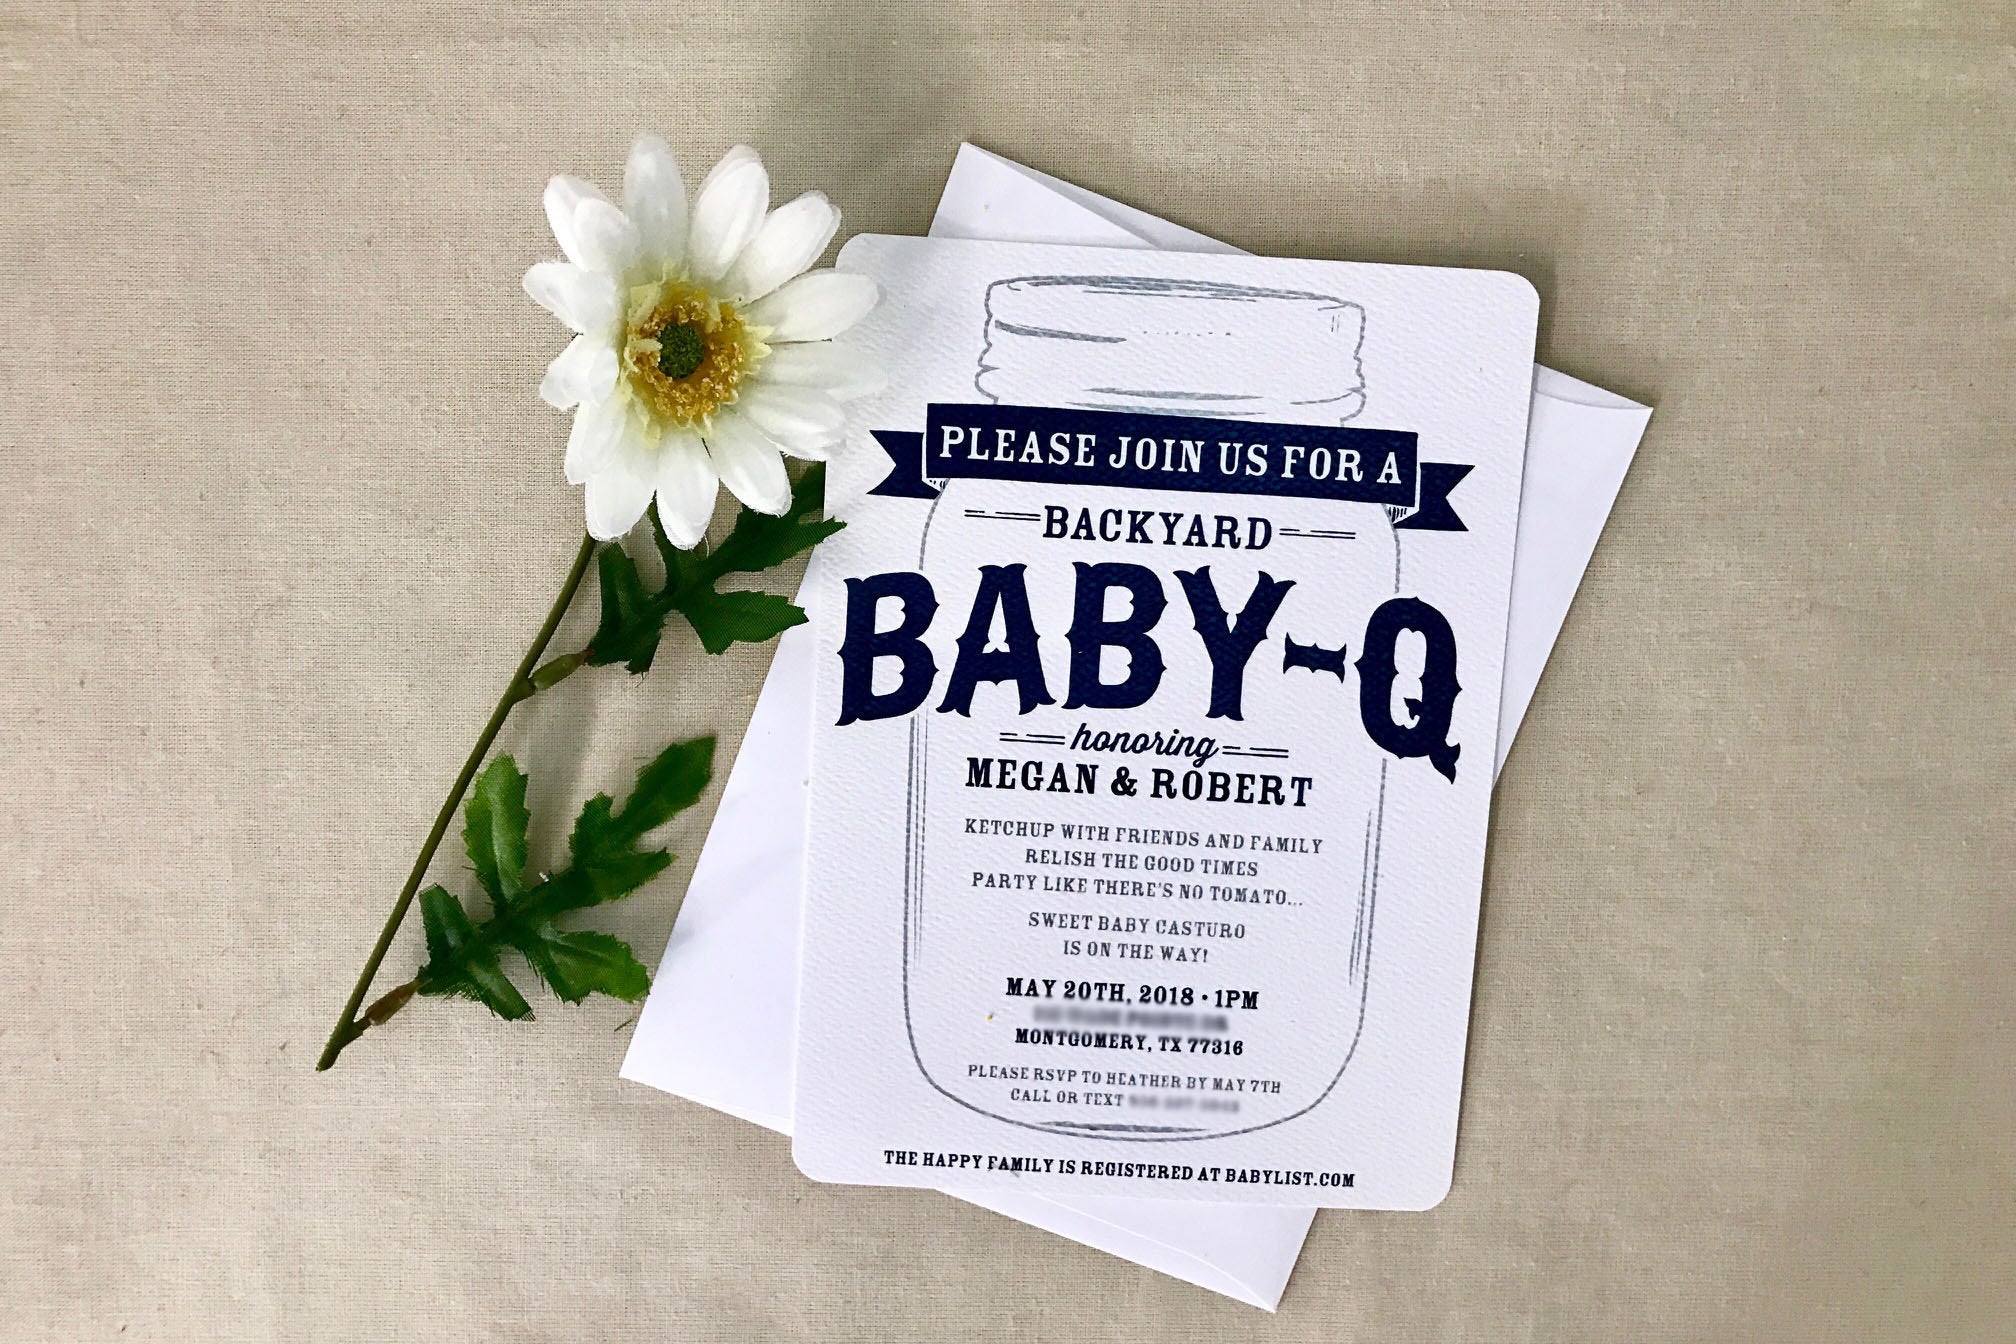 Backyard Baby-Q Baby Shower Navy Blue Invitation // BBQ Baby Shower // Baby Boy Shower Invite // DIY // Printable // Template